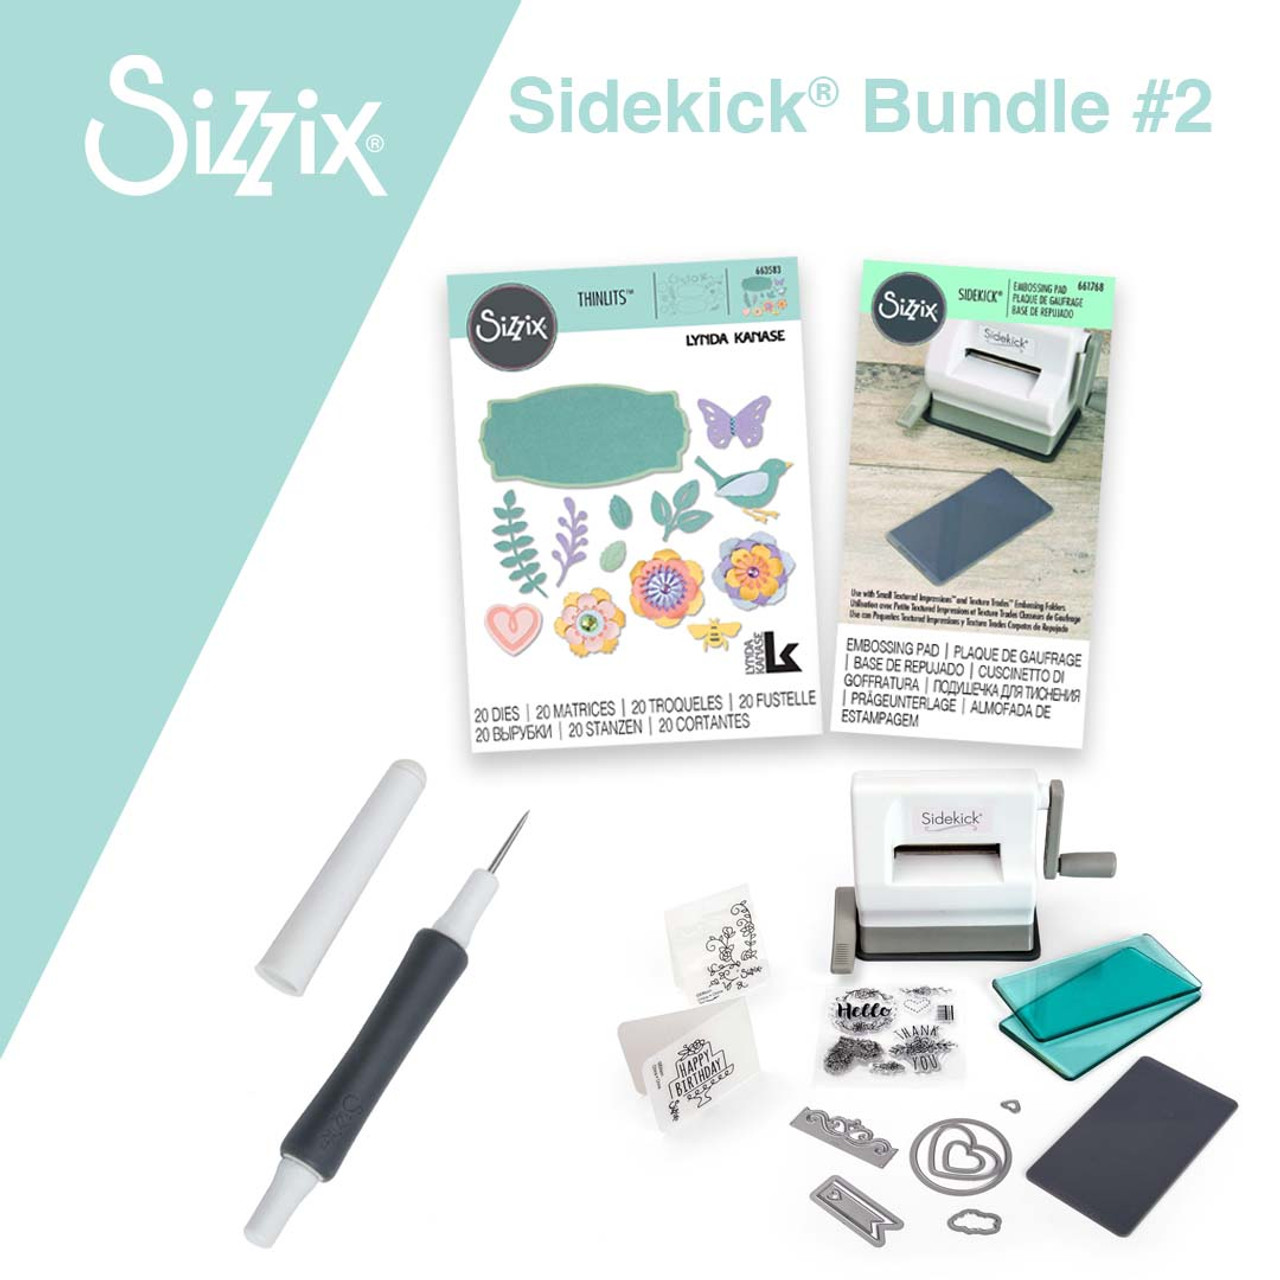 Sizzix Sidekick for Beginners - CraftStash Inspiration